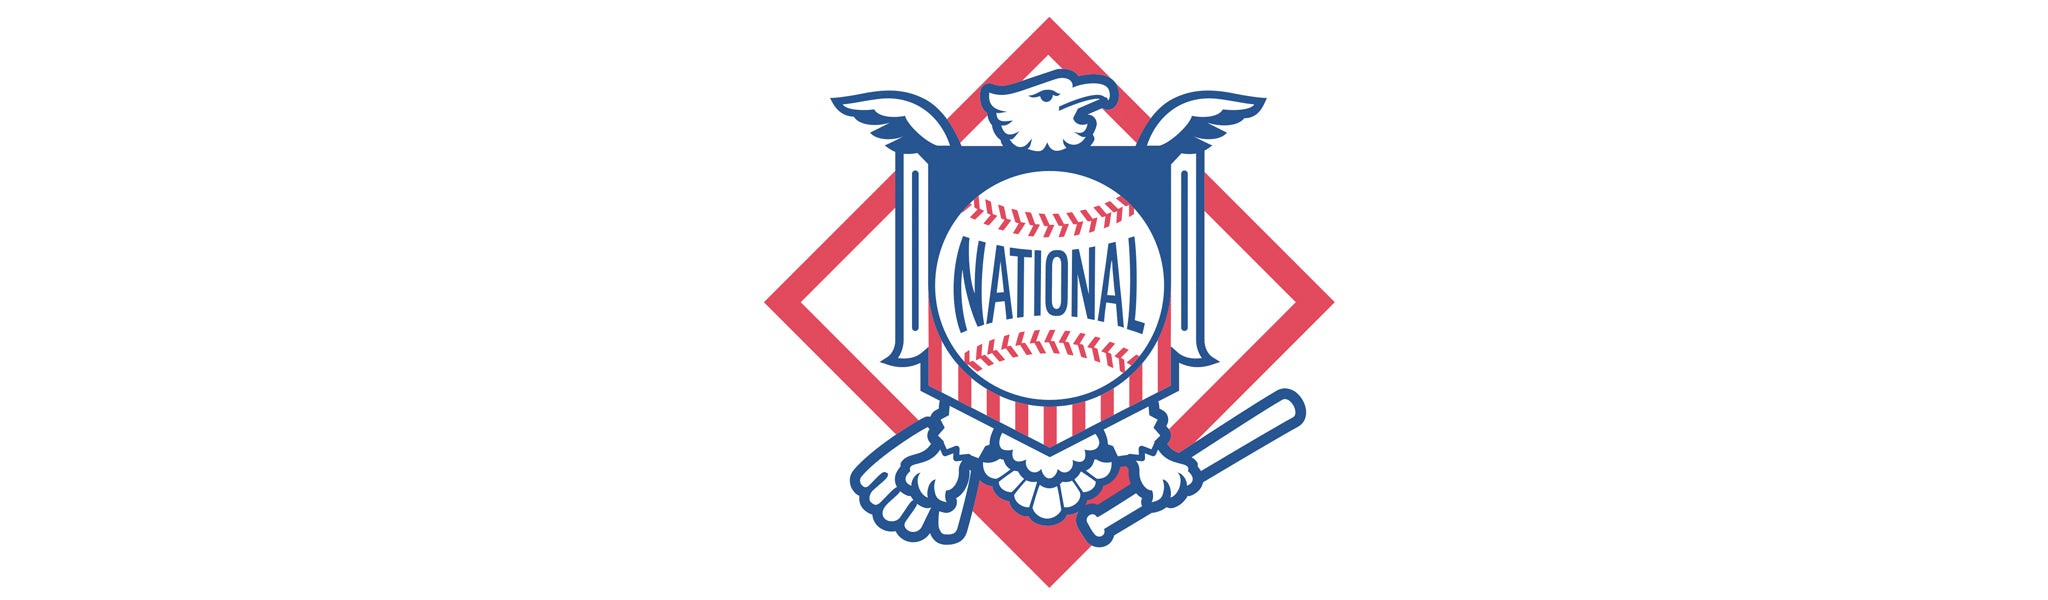 MLB National League